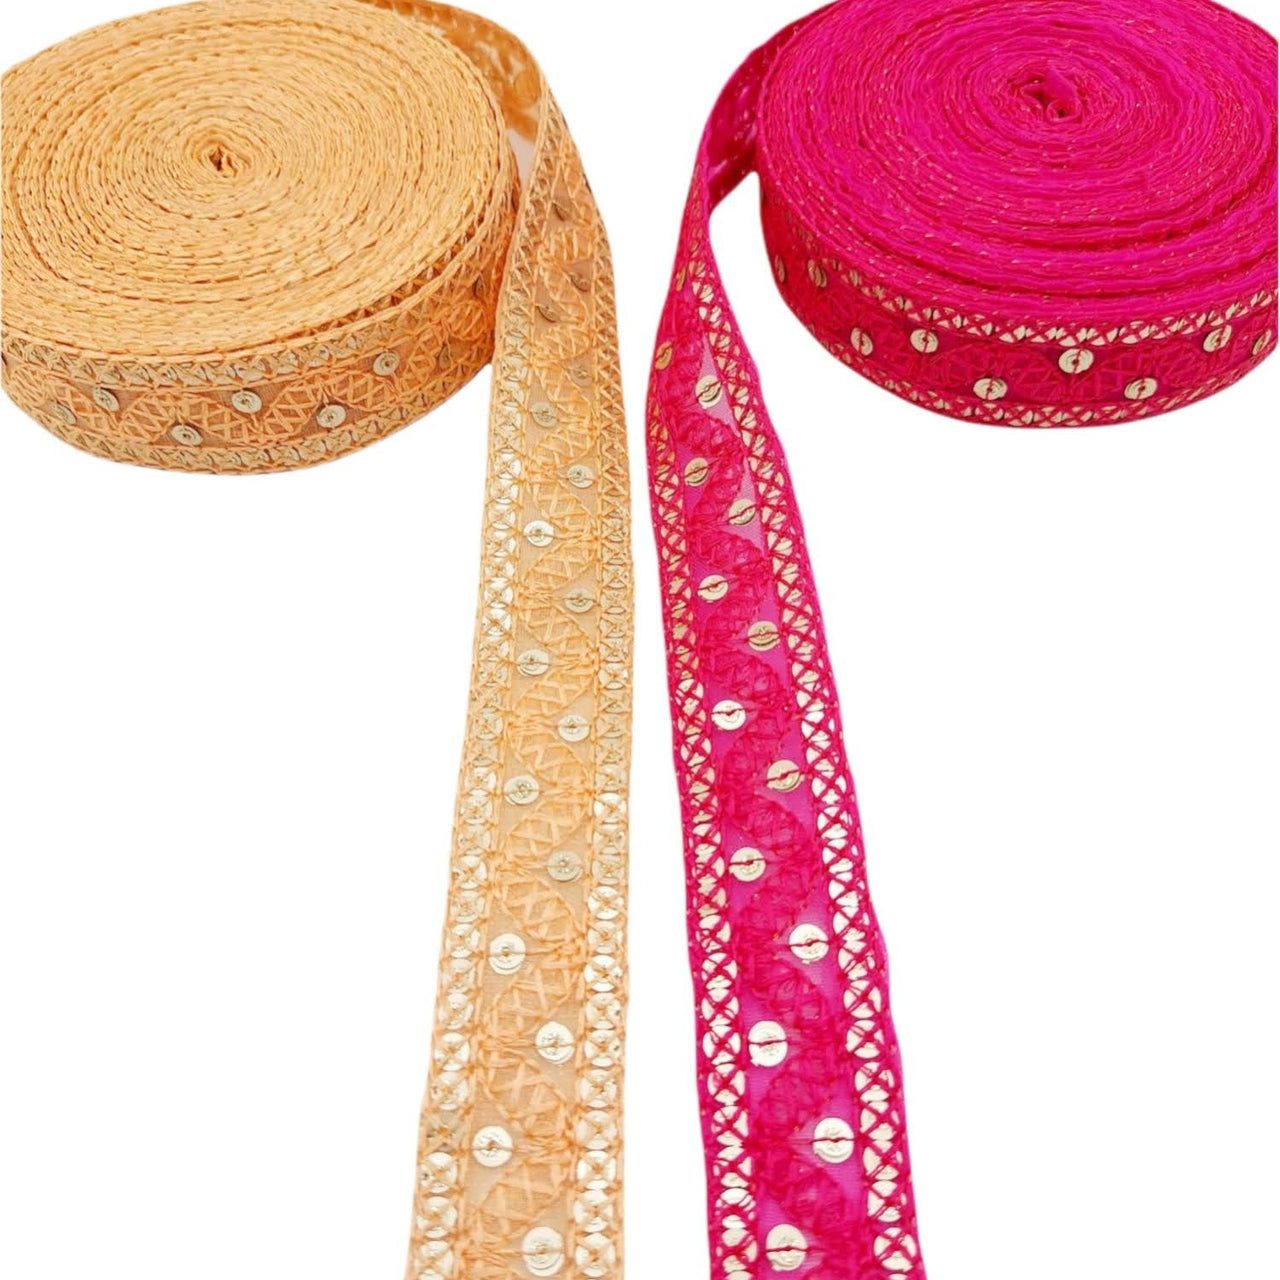 Embroidered Lace Trim Sequins Trim 9 Yard Decorative Sari Border Costume Ribbon Crafting Sewing Tape